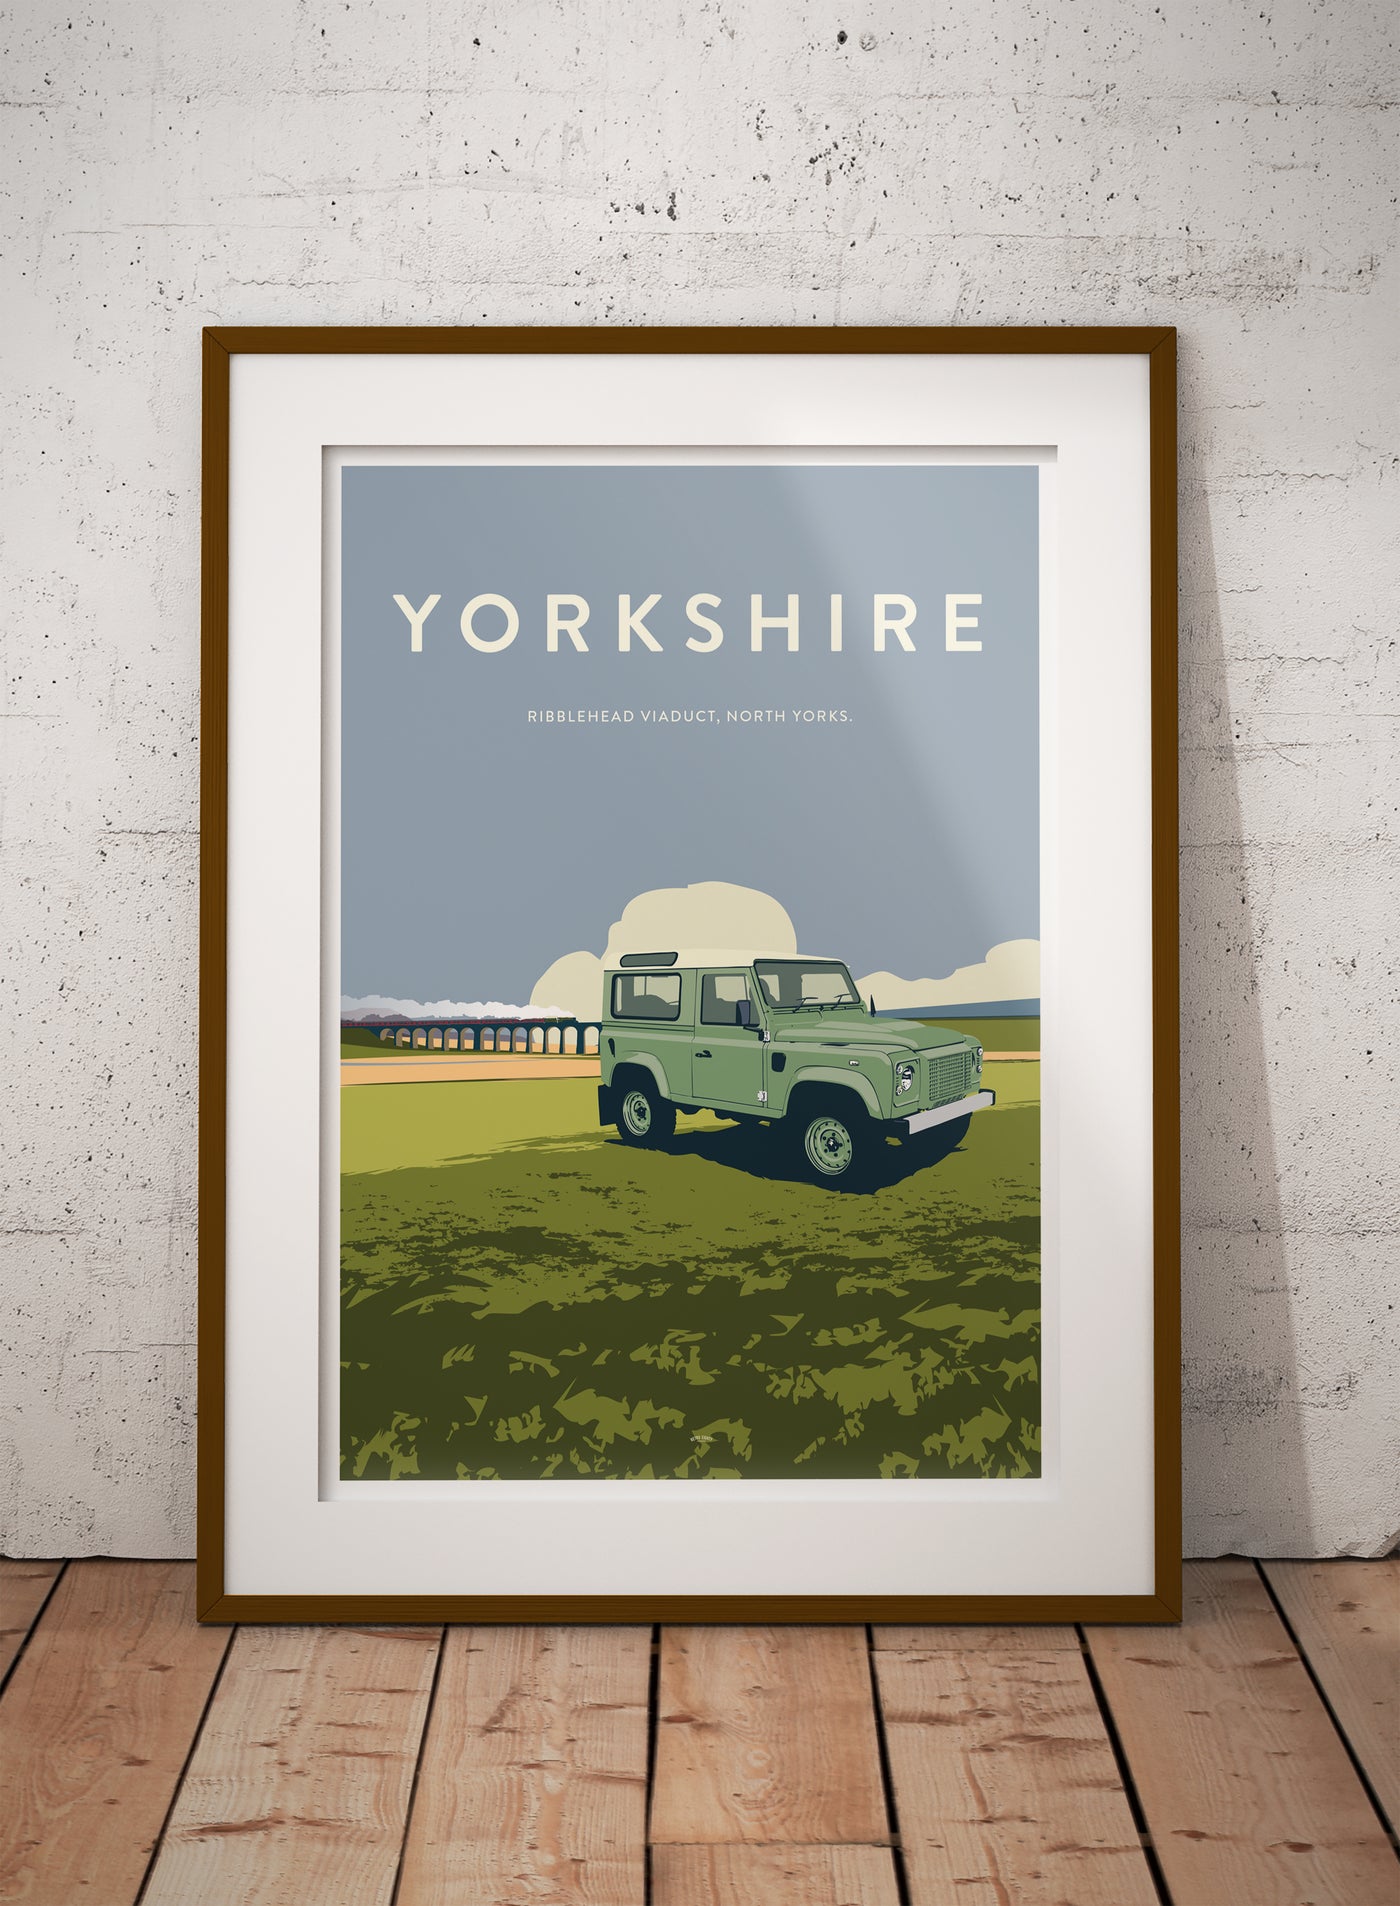 'Yorkshire' prints